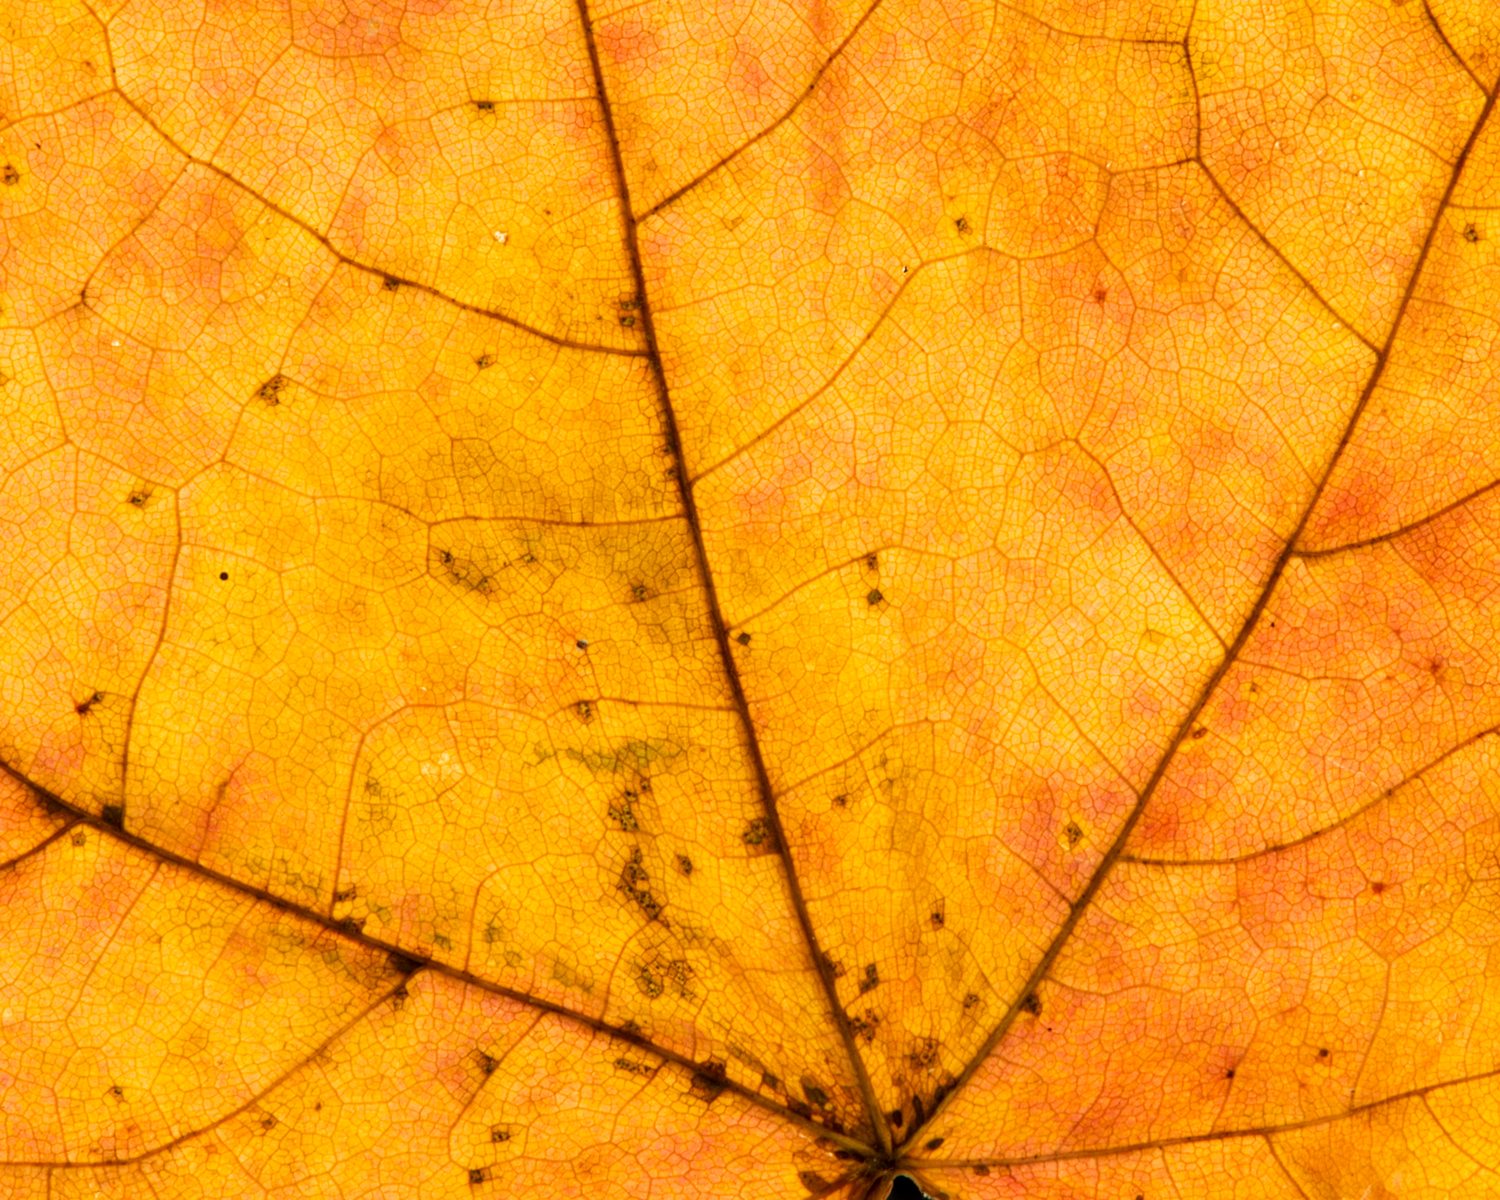 leavesandroses-6.jpg